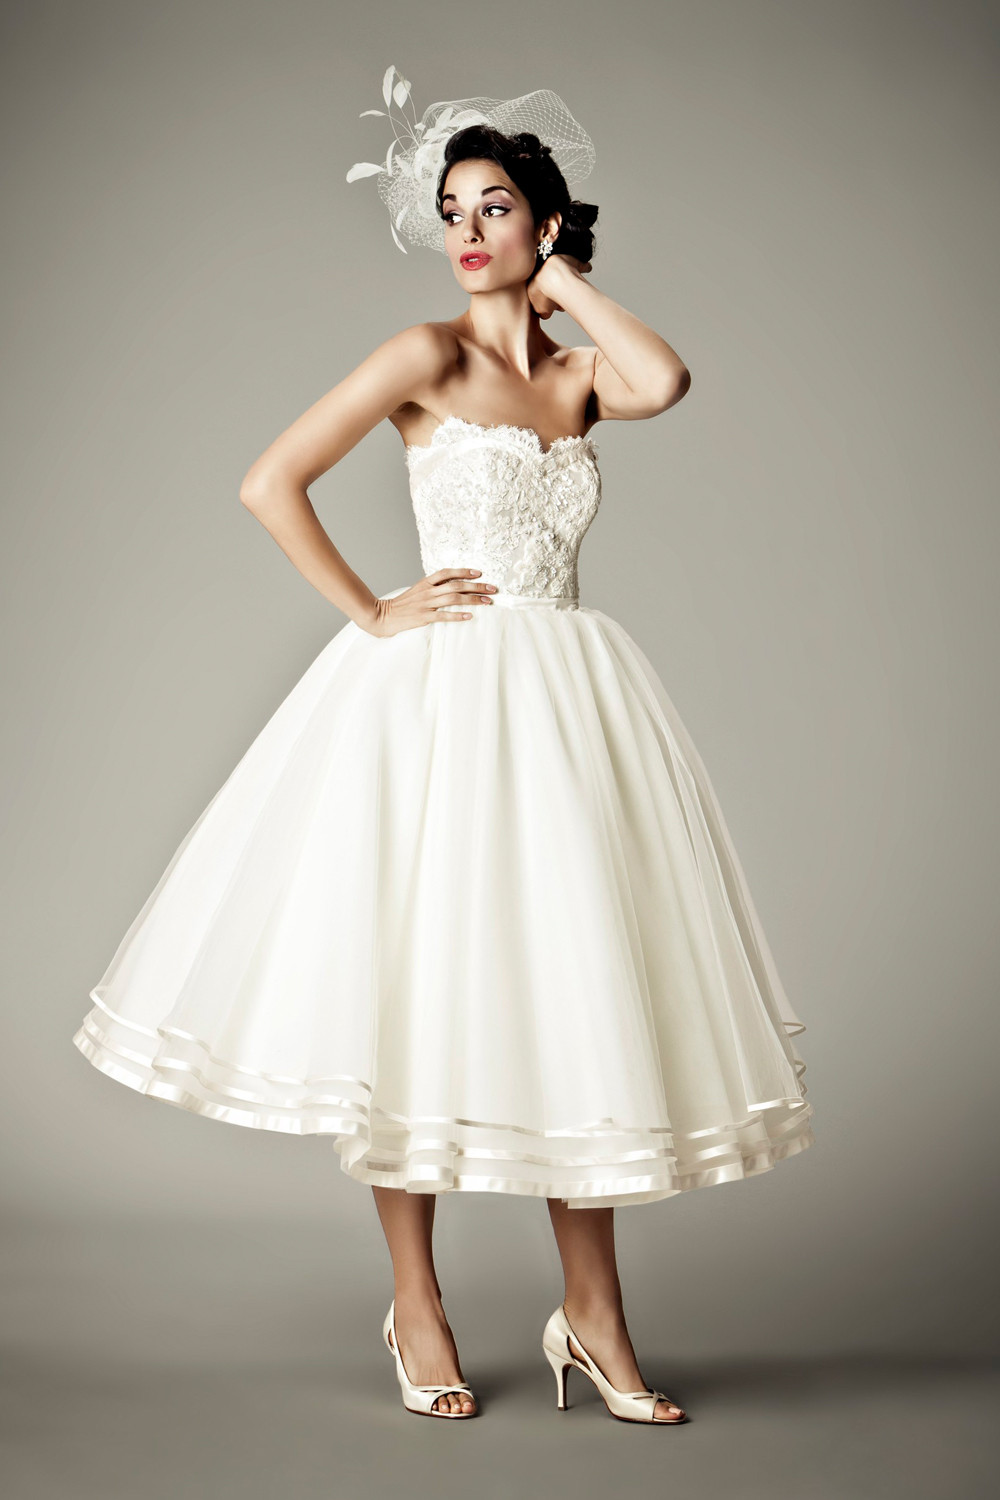 Retro Wedding Gowns
 GoS Bridal trends 2012 Vintage inspired wedding dresses